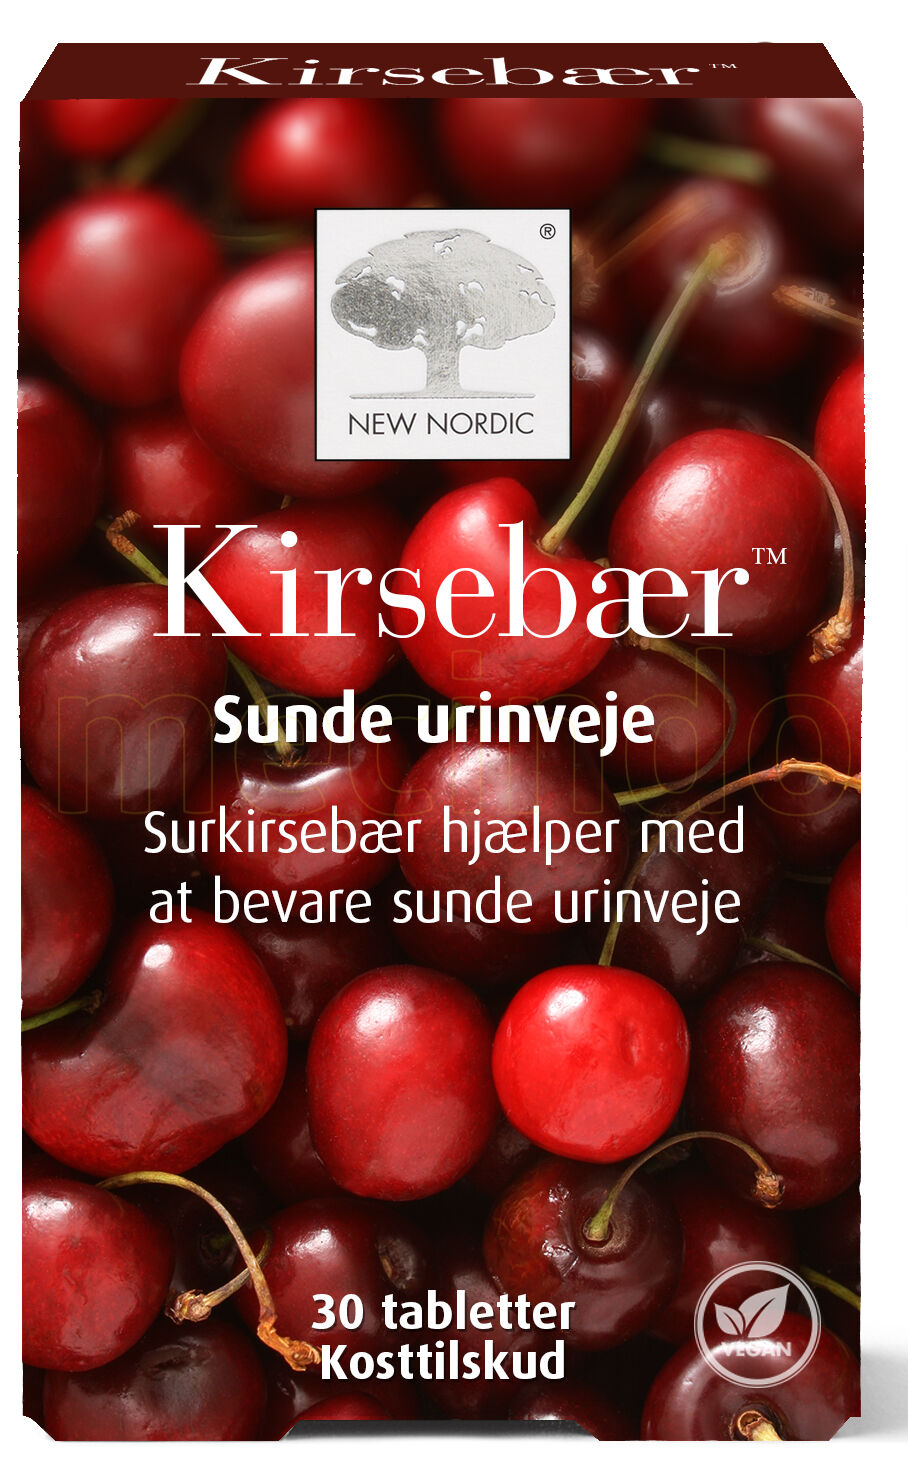 New Nordic Kirsebær - 30 Tablett